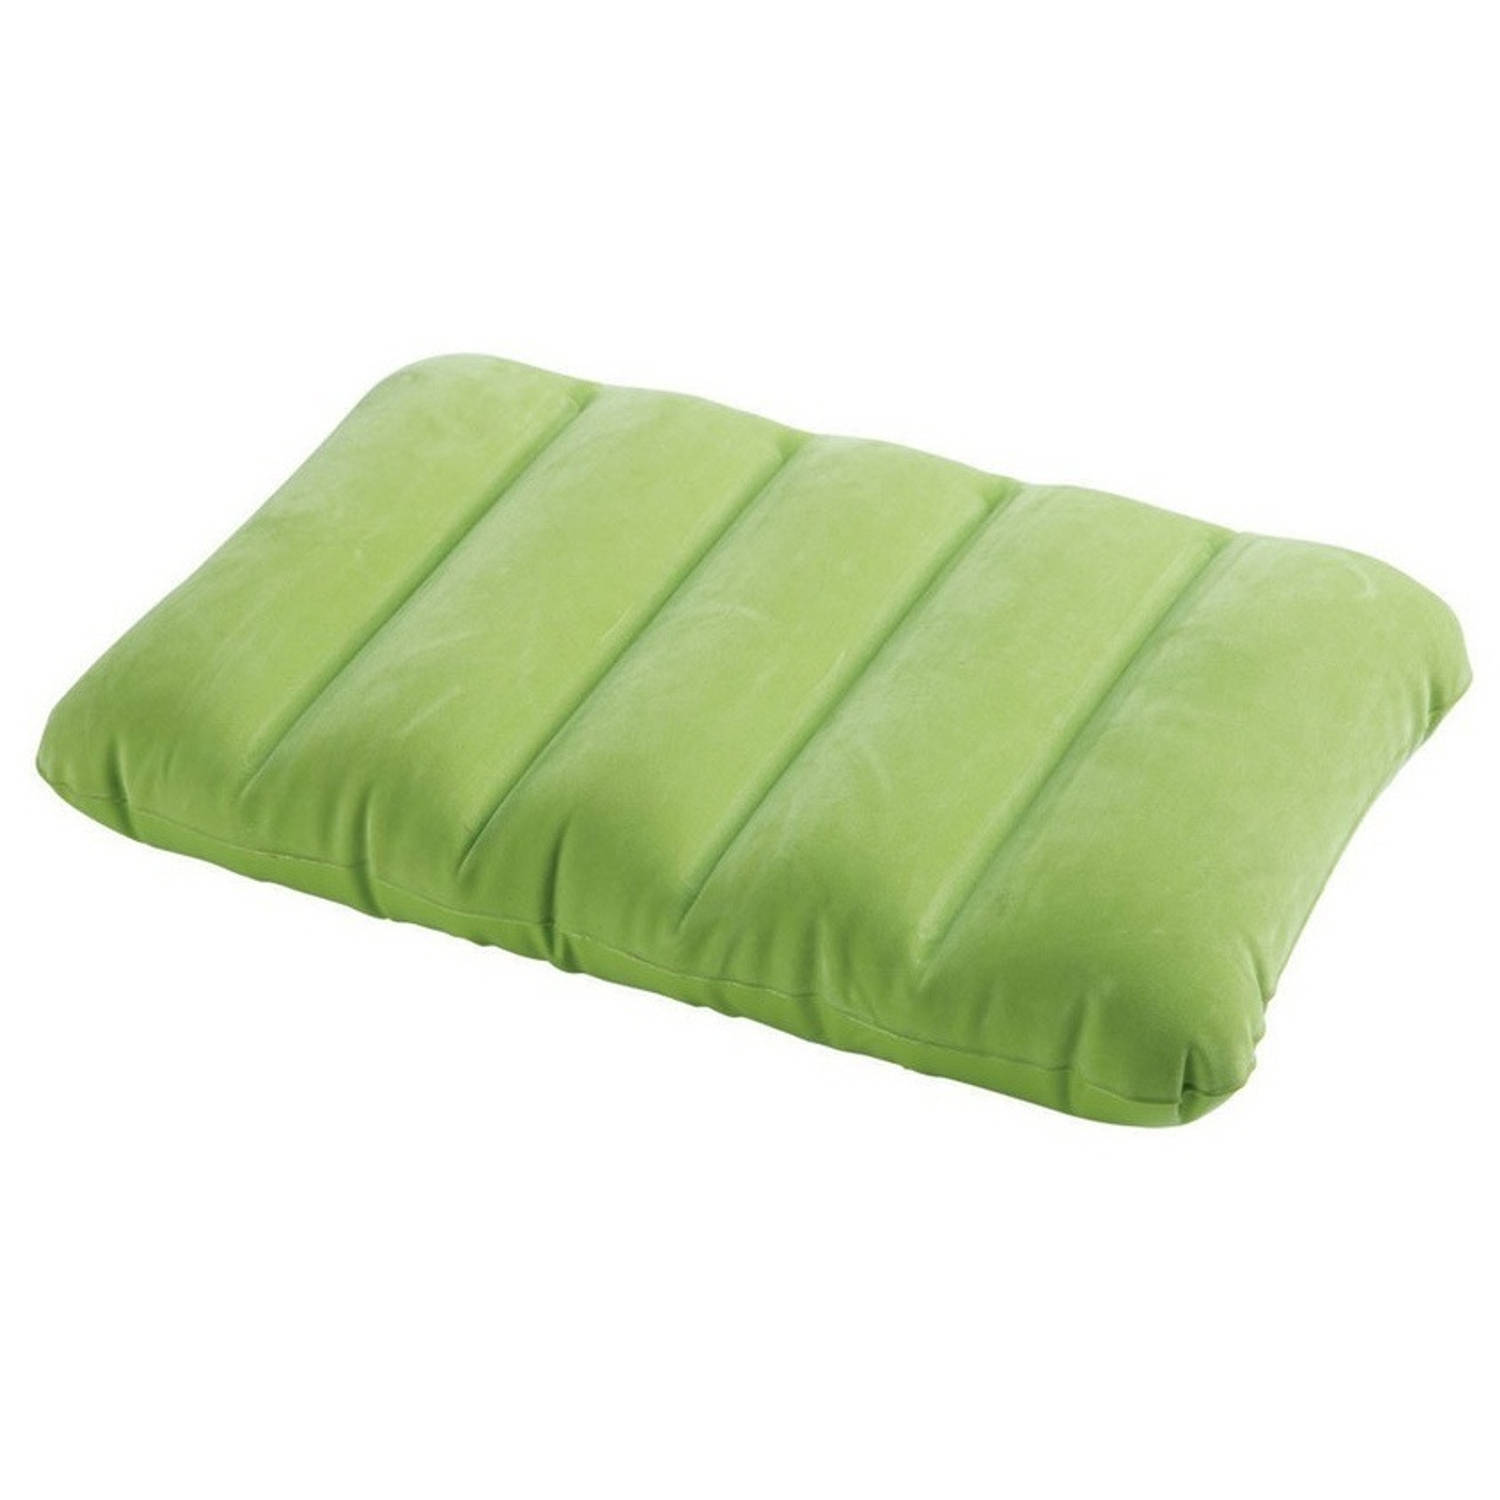 Intex Opblaaskussen Kidz Pillow 43 X 28 X 9 Cm - Groen